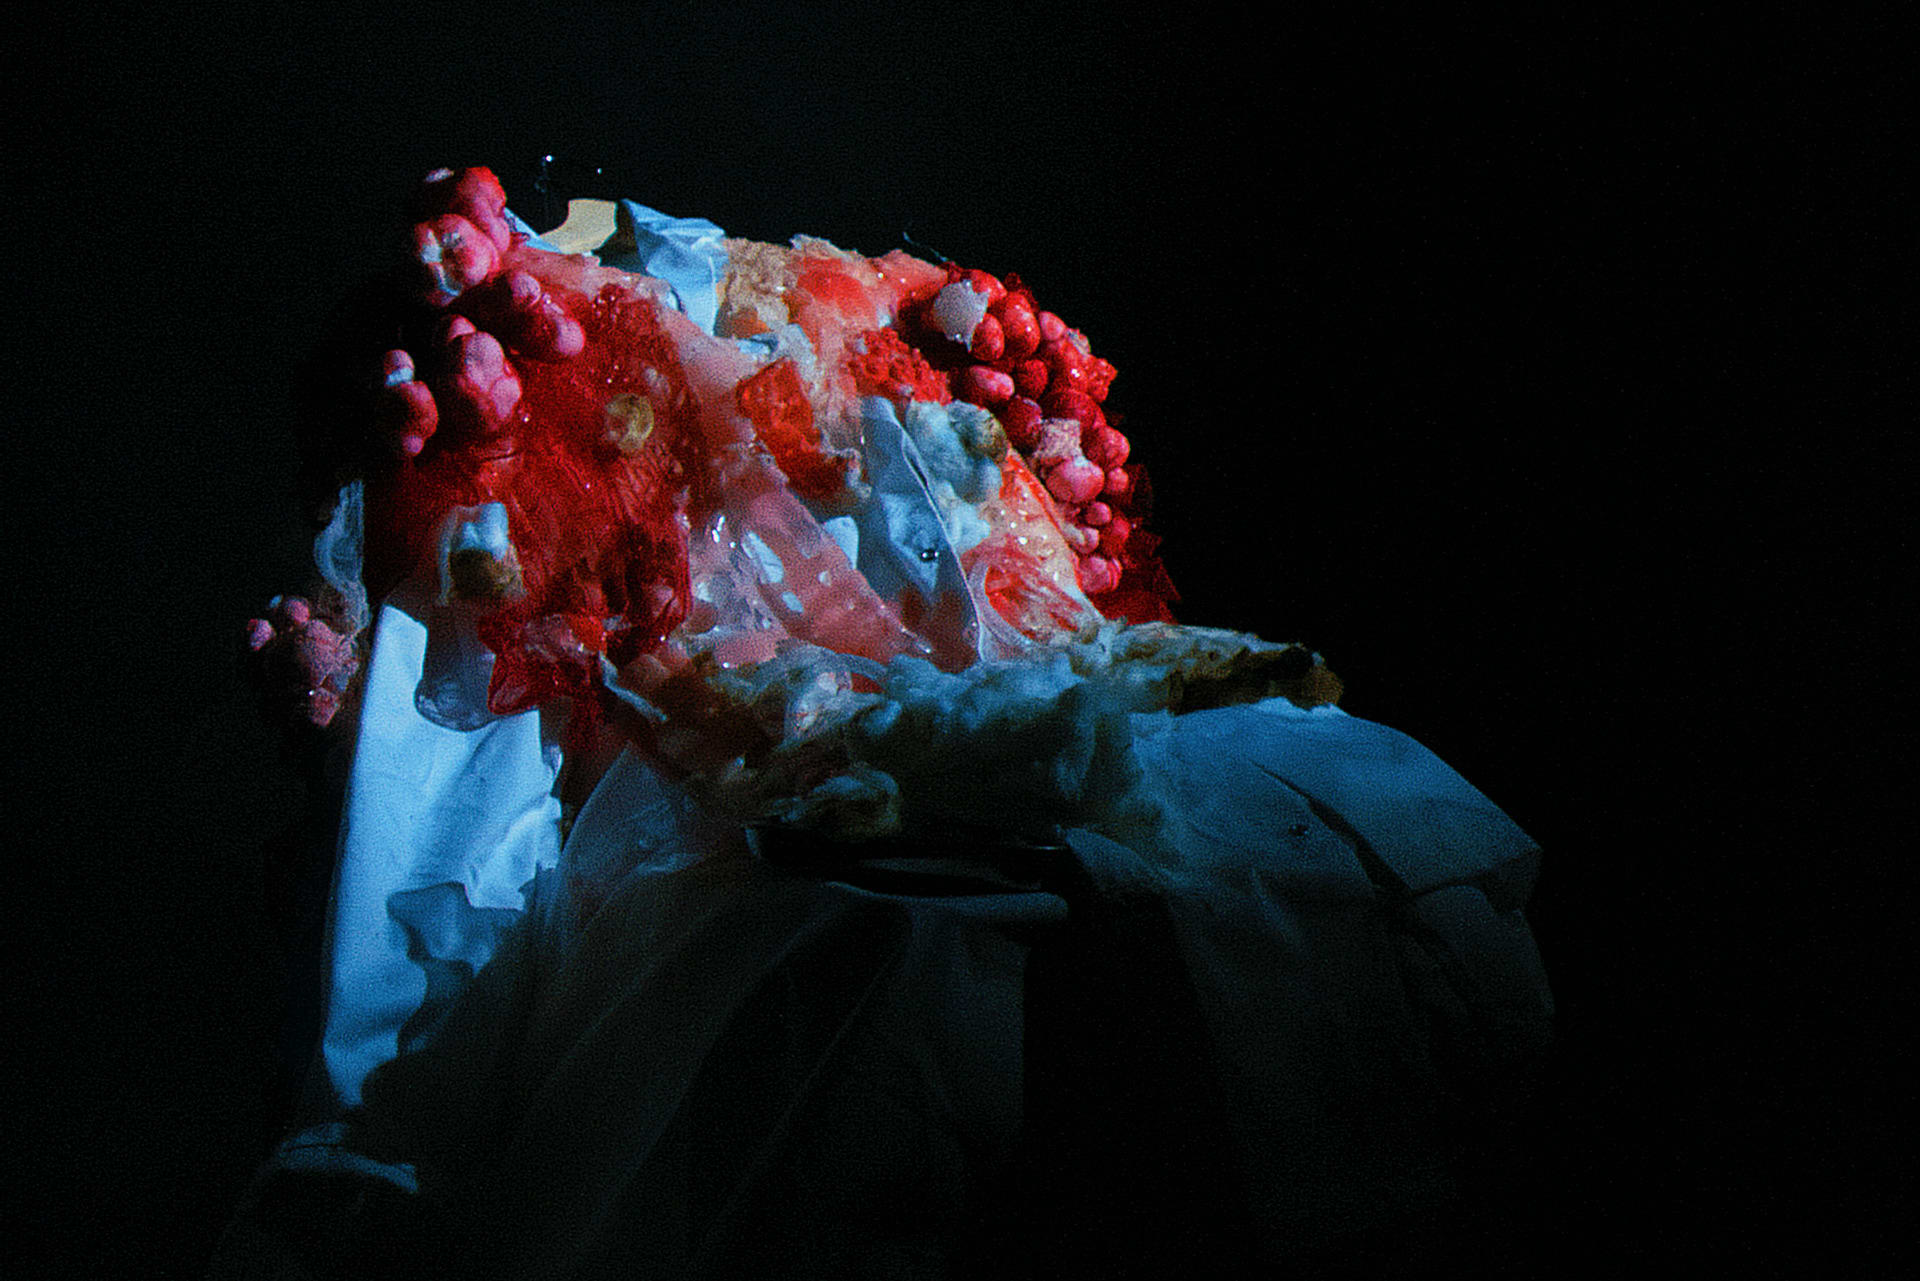 PANDEMIC - Flesh, blood and bones